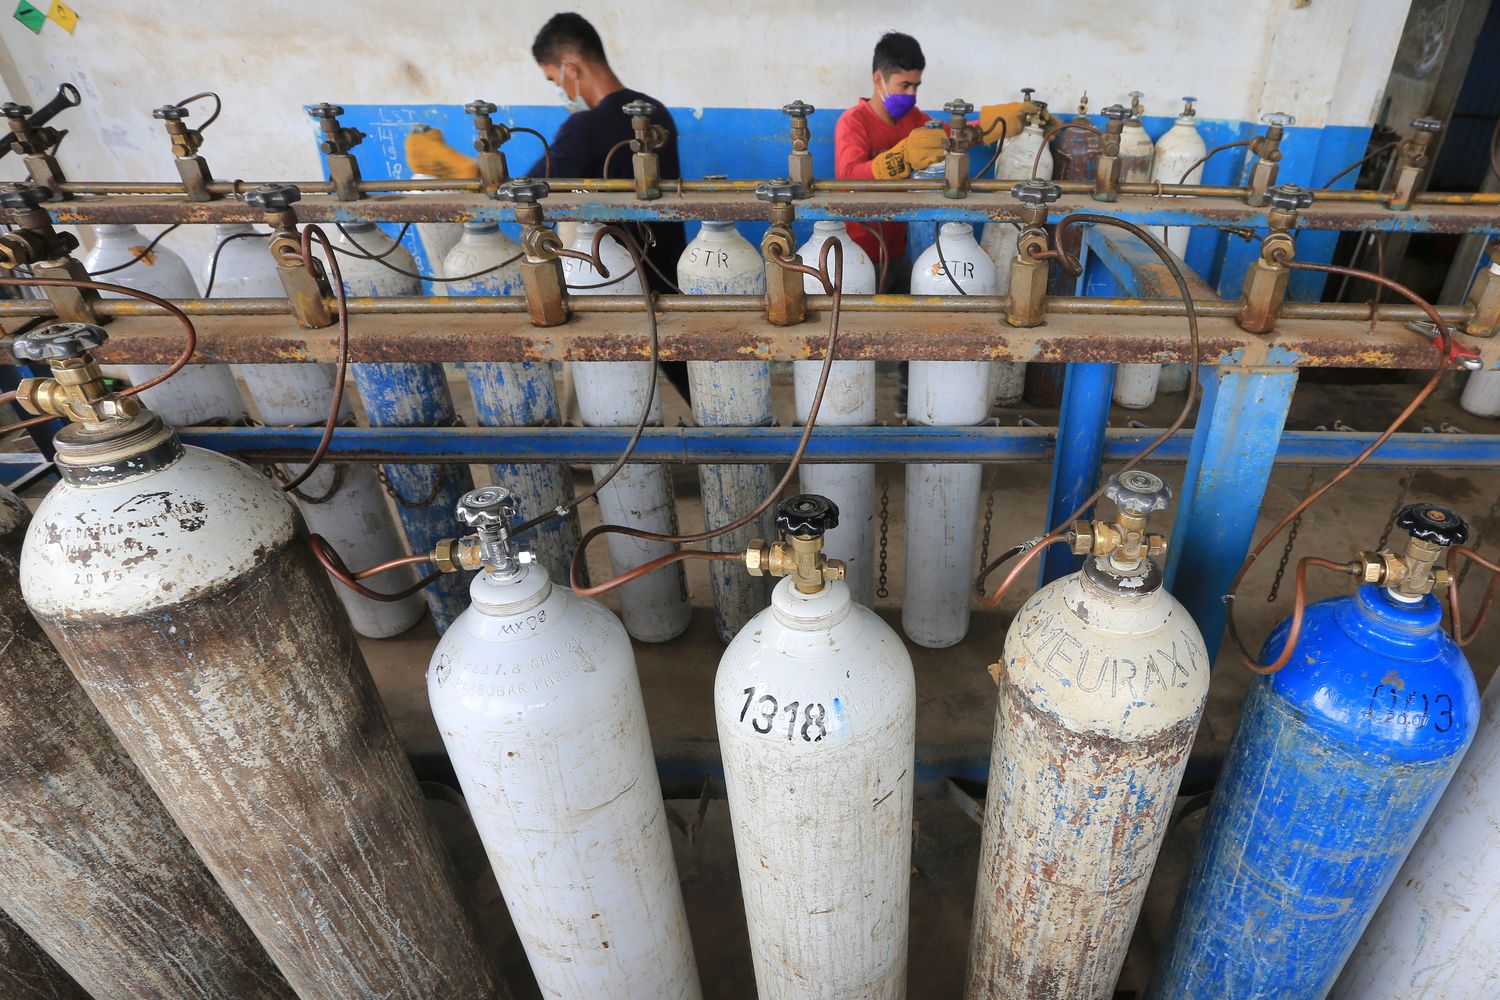 Di masa pandemi yang semakin meningkat, Indonesia mengalami kekurangan persediaan oksigen. Sumber: Jakarta Post 